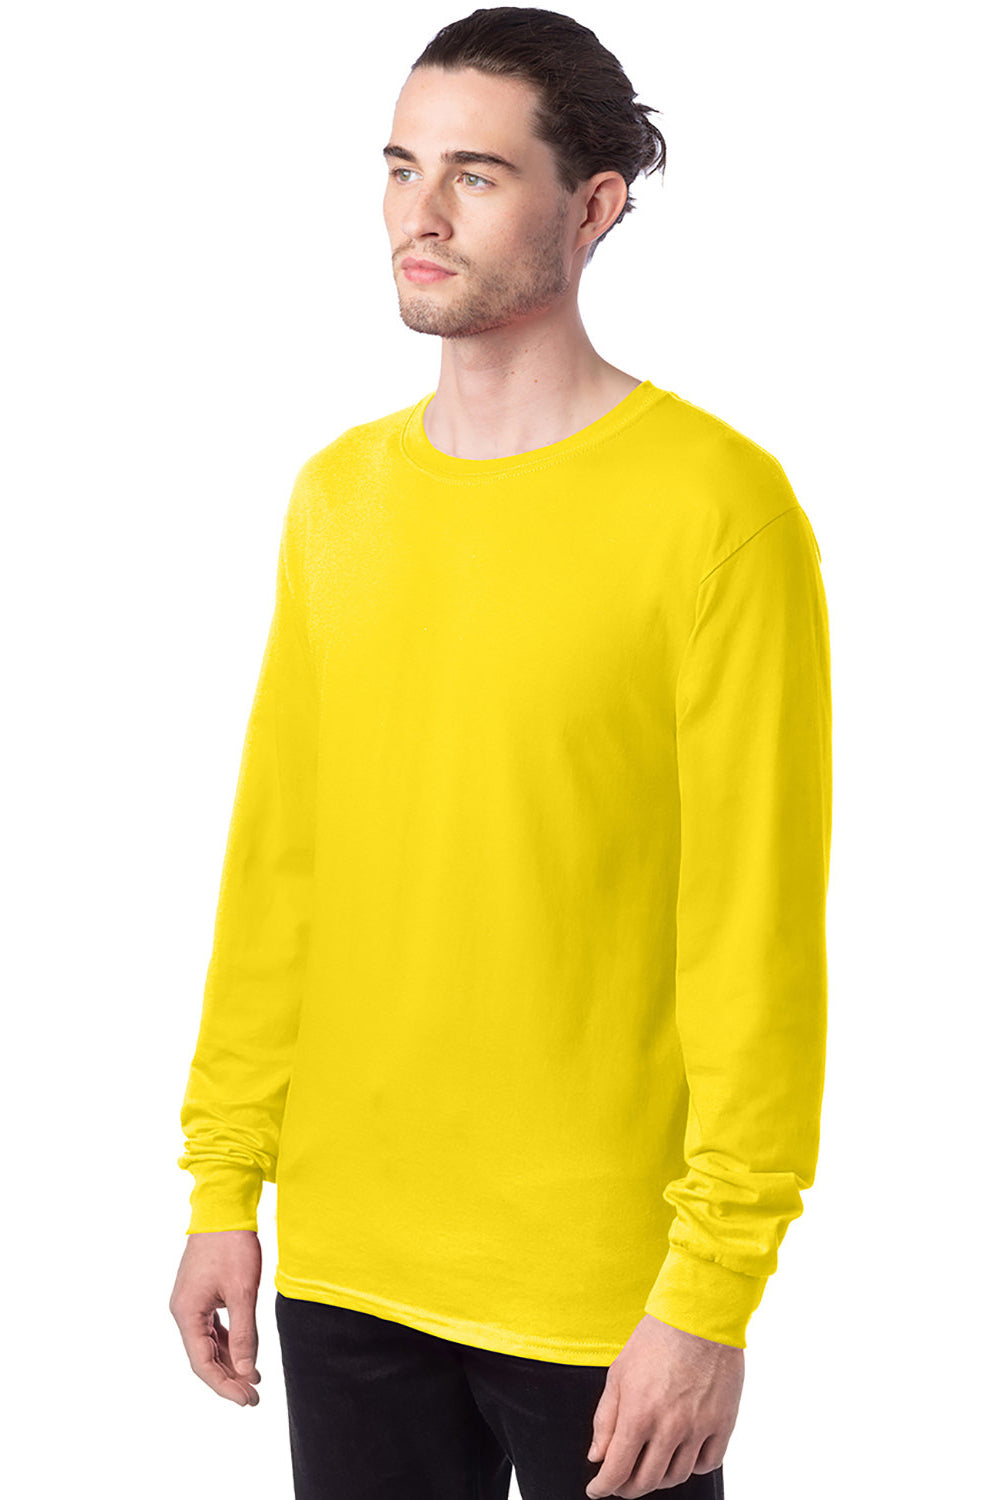 Hanes 5286 Mens ComfortSoft Long Sleeve Crewneck T-Shirt Athletic Yellow 3Q